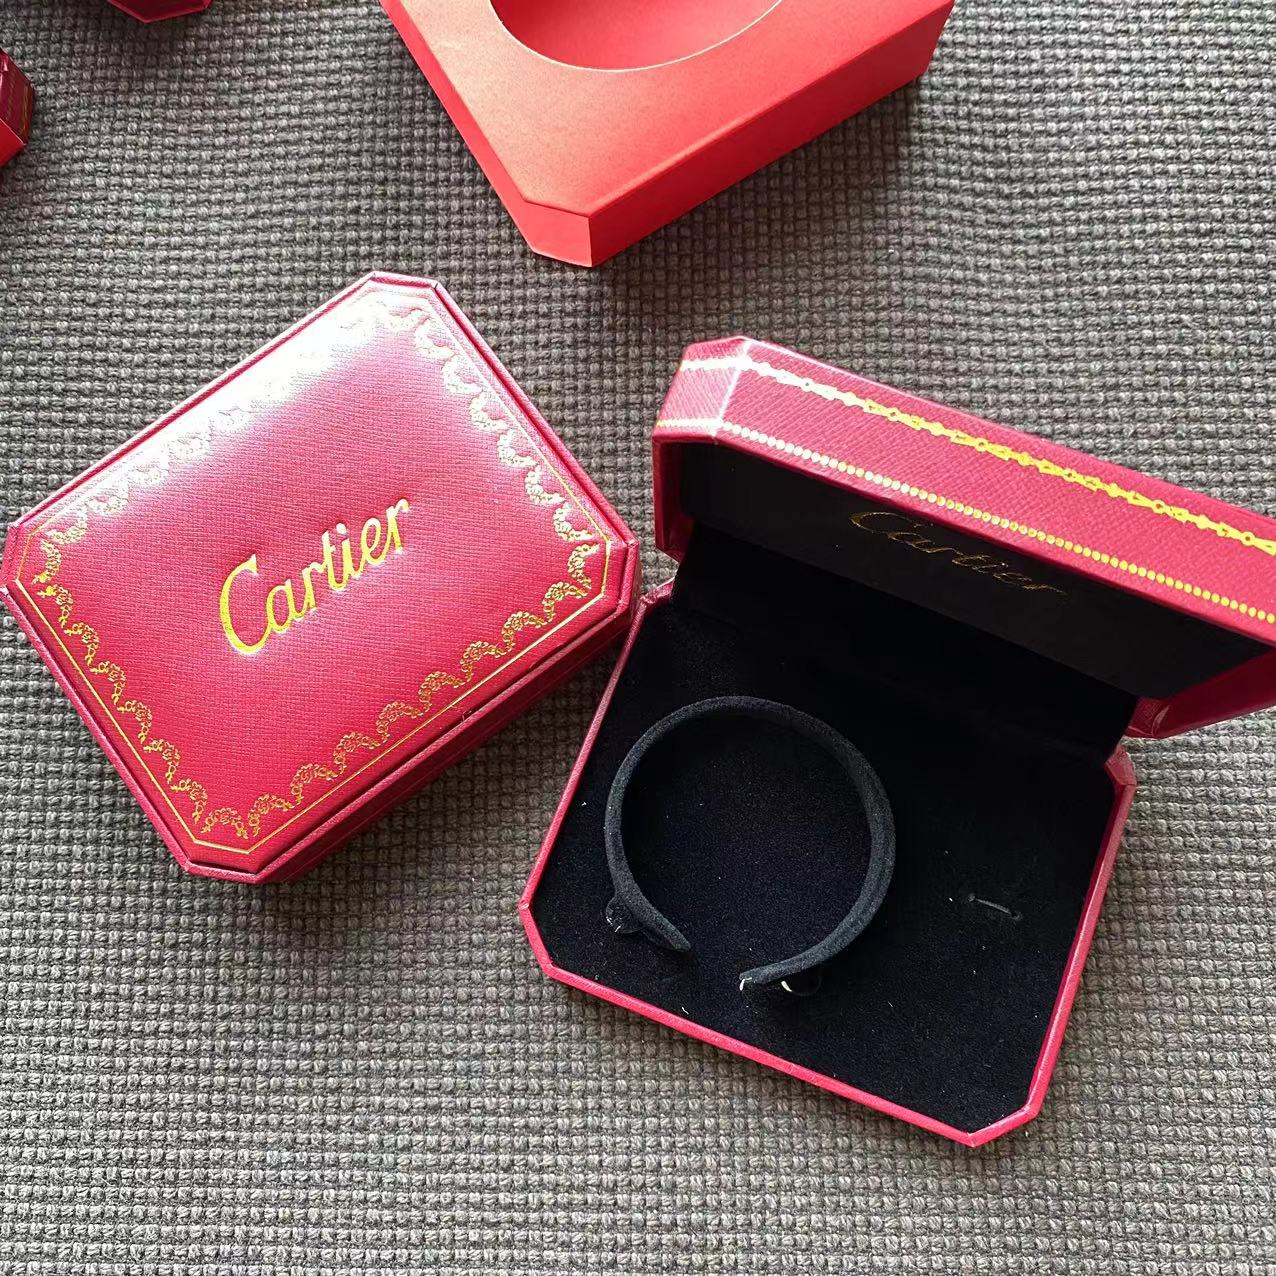 Cartier Cartier jewelry box 1 pcs